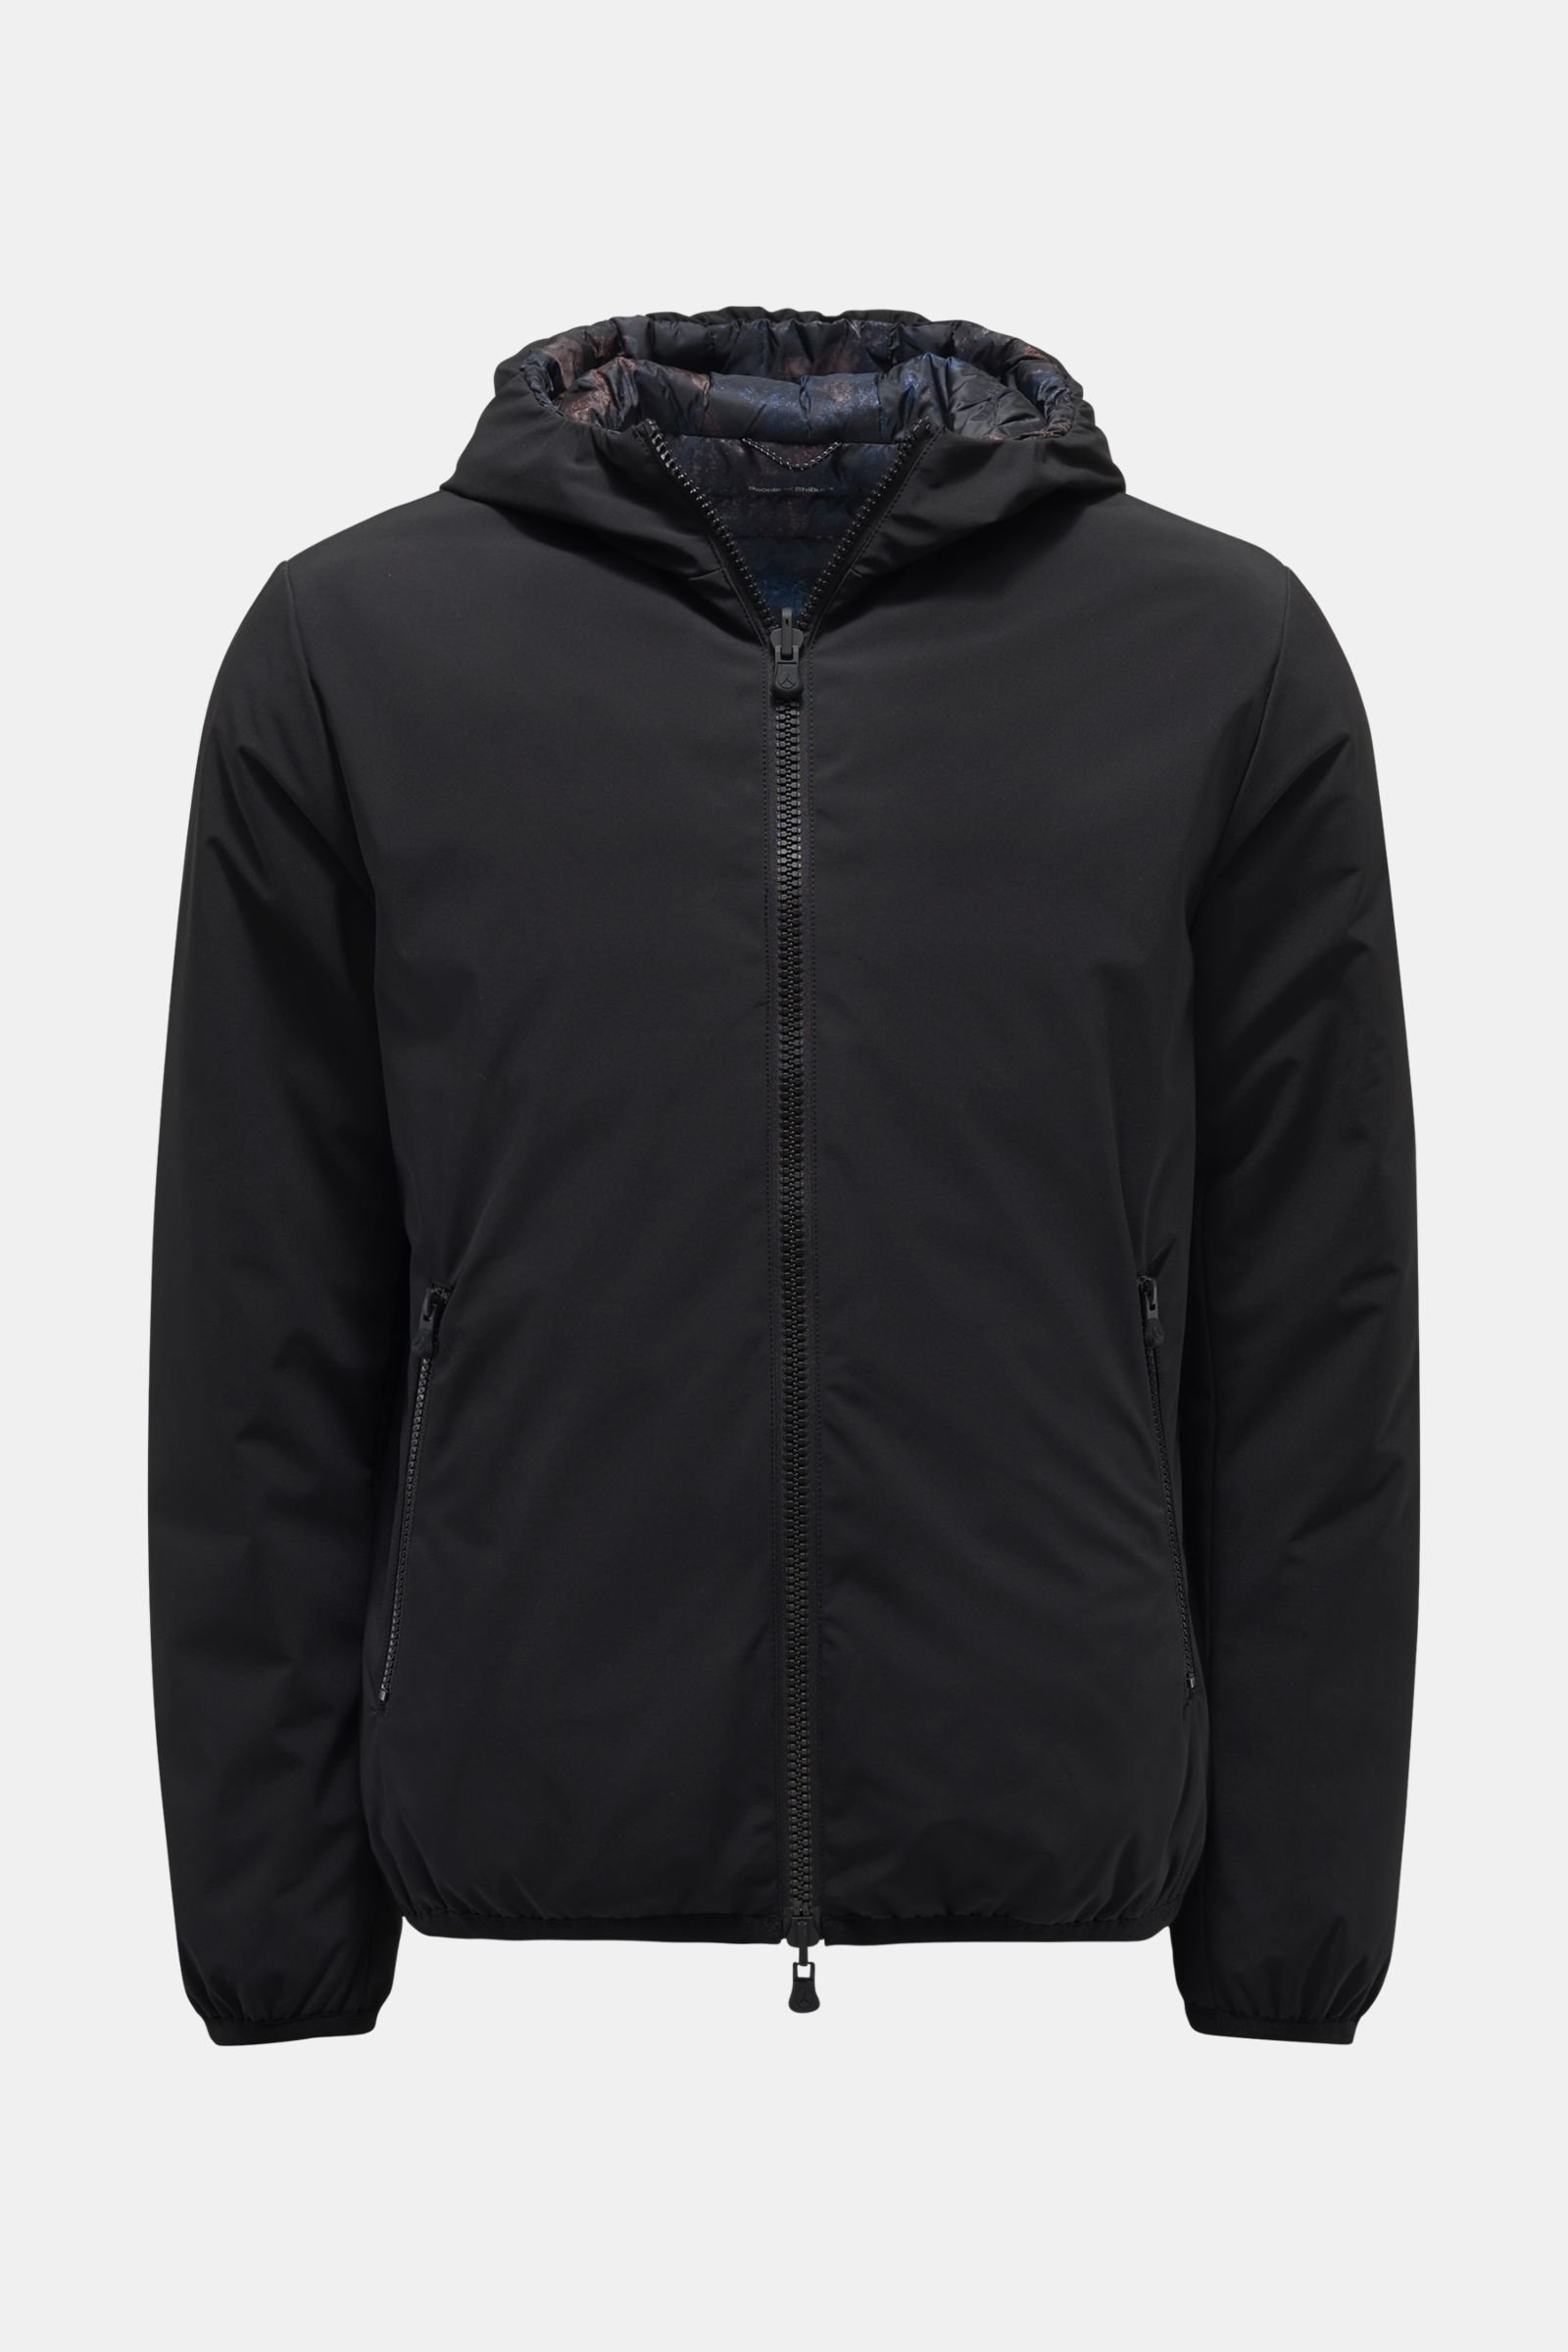 Reversible jacket 'Toshiro' black/navy patterned